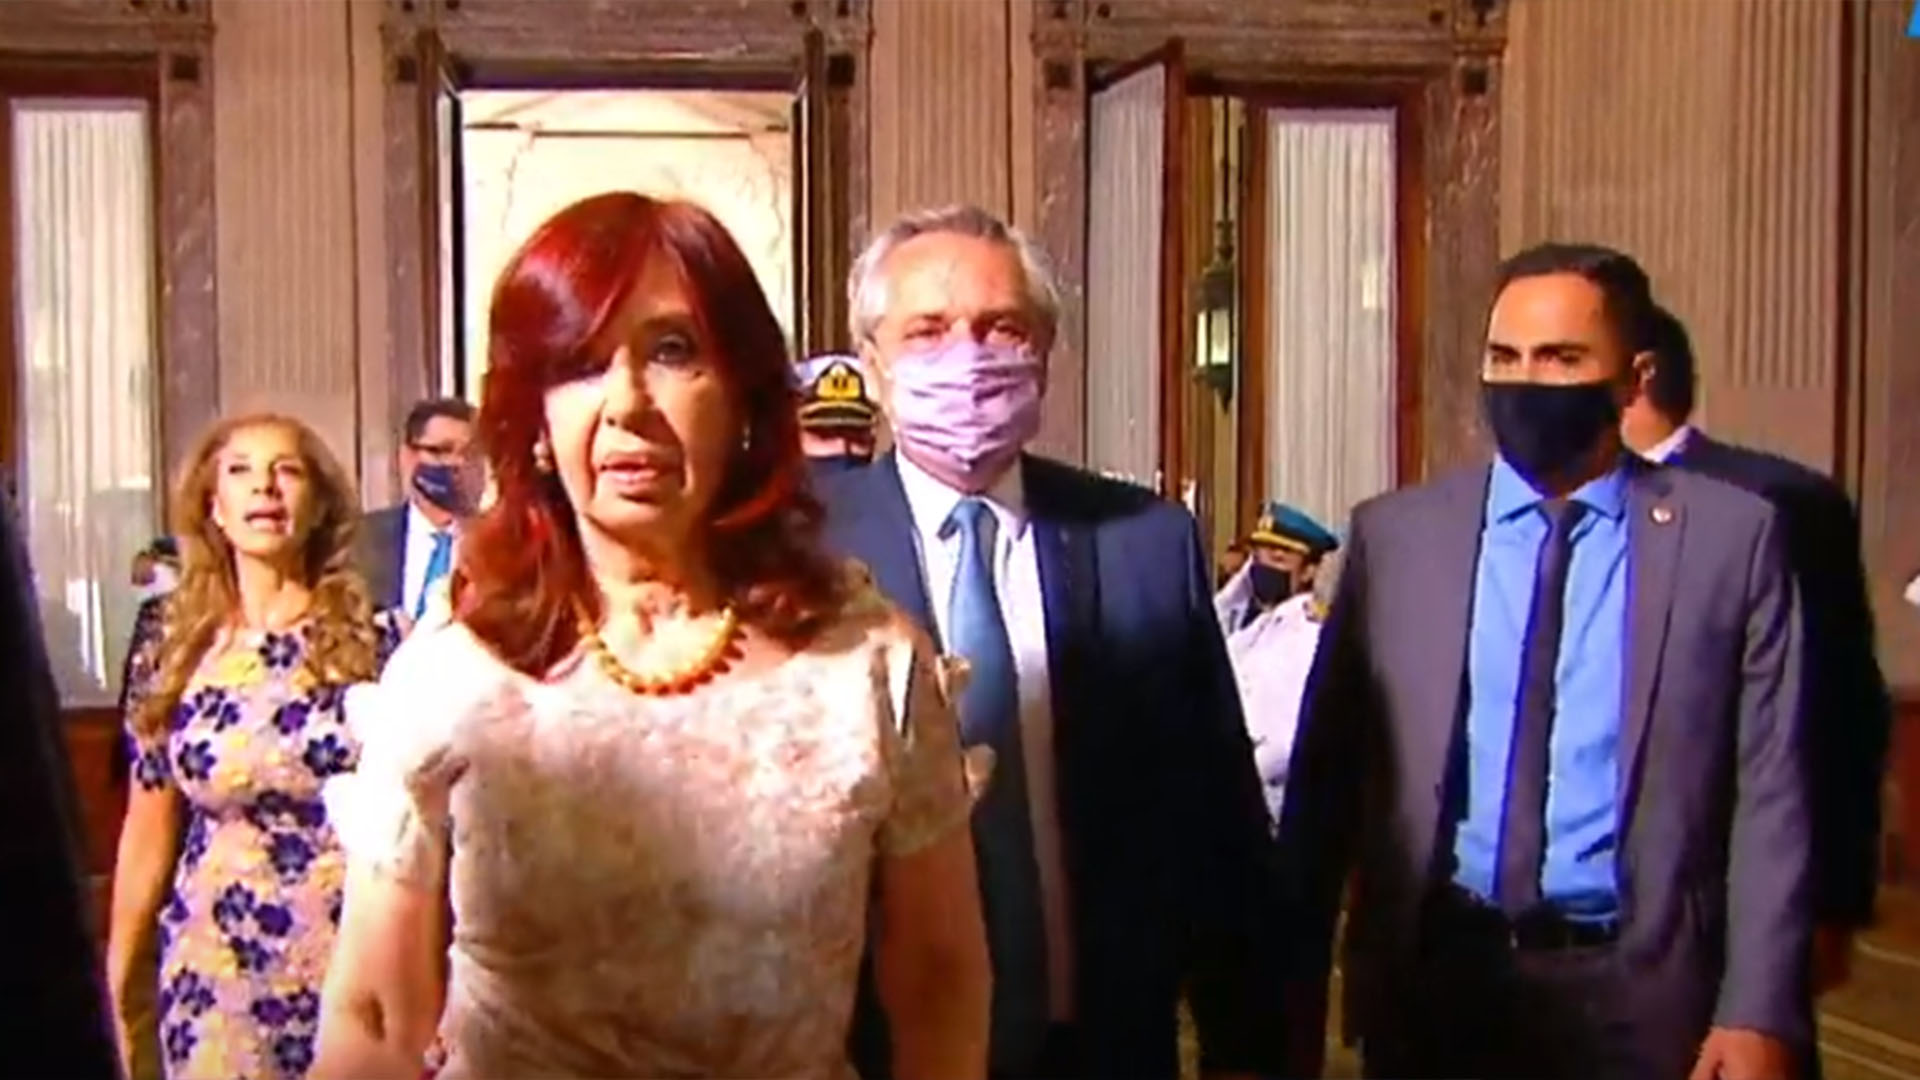 Cristina Fernández de Kirchner caminando por delante del mandatario